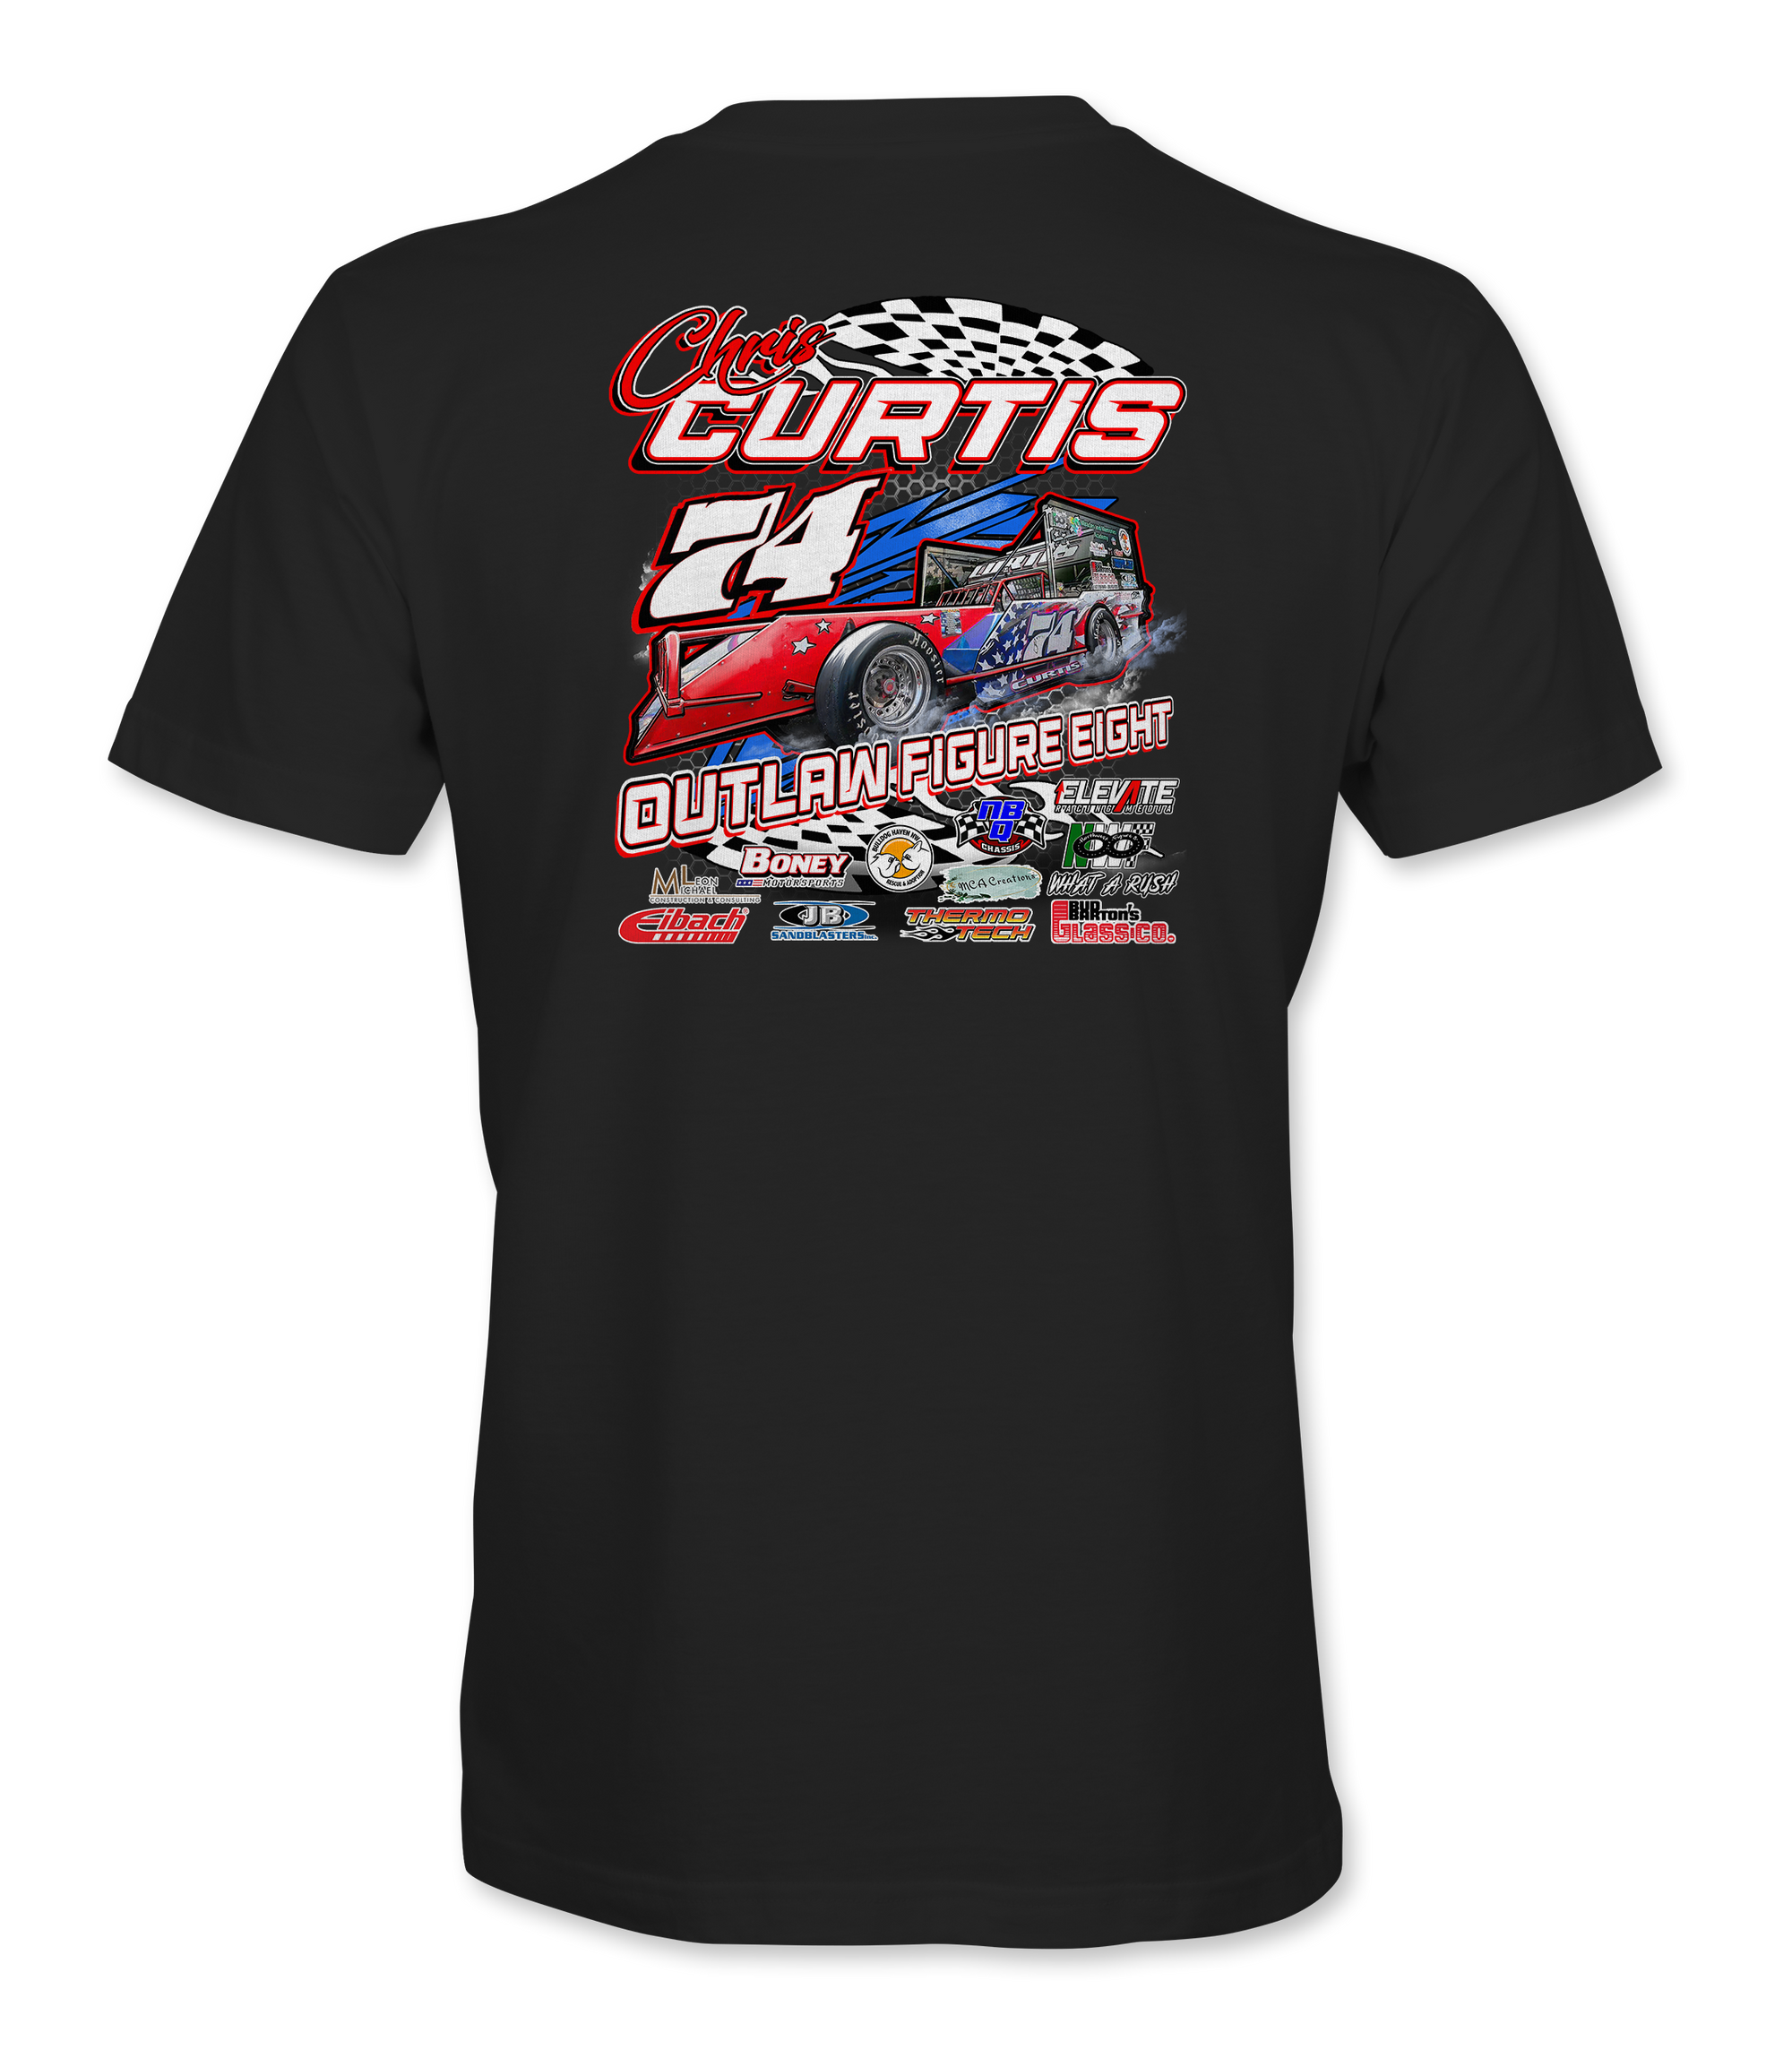 Chris Curtis T-Shirts